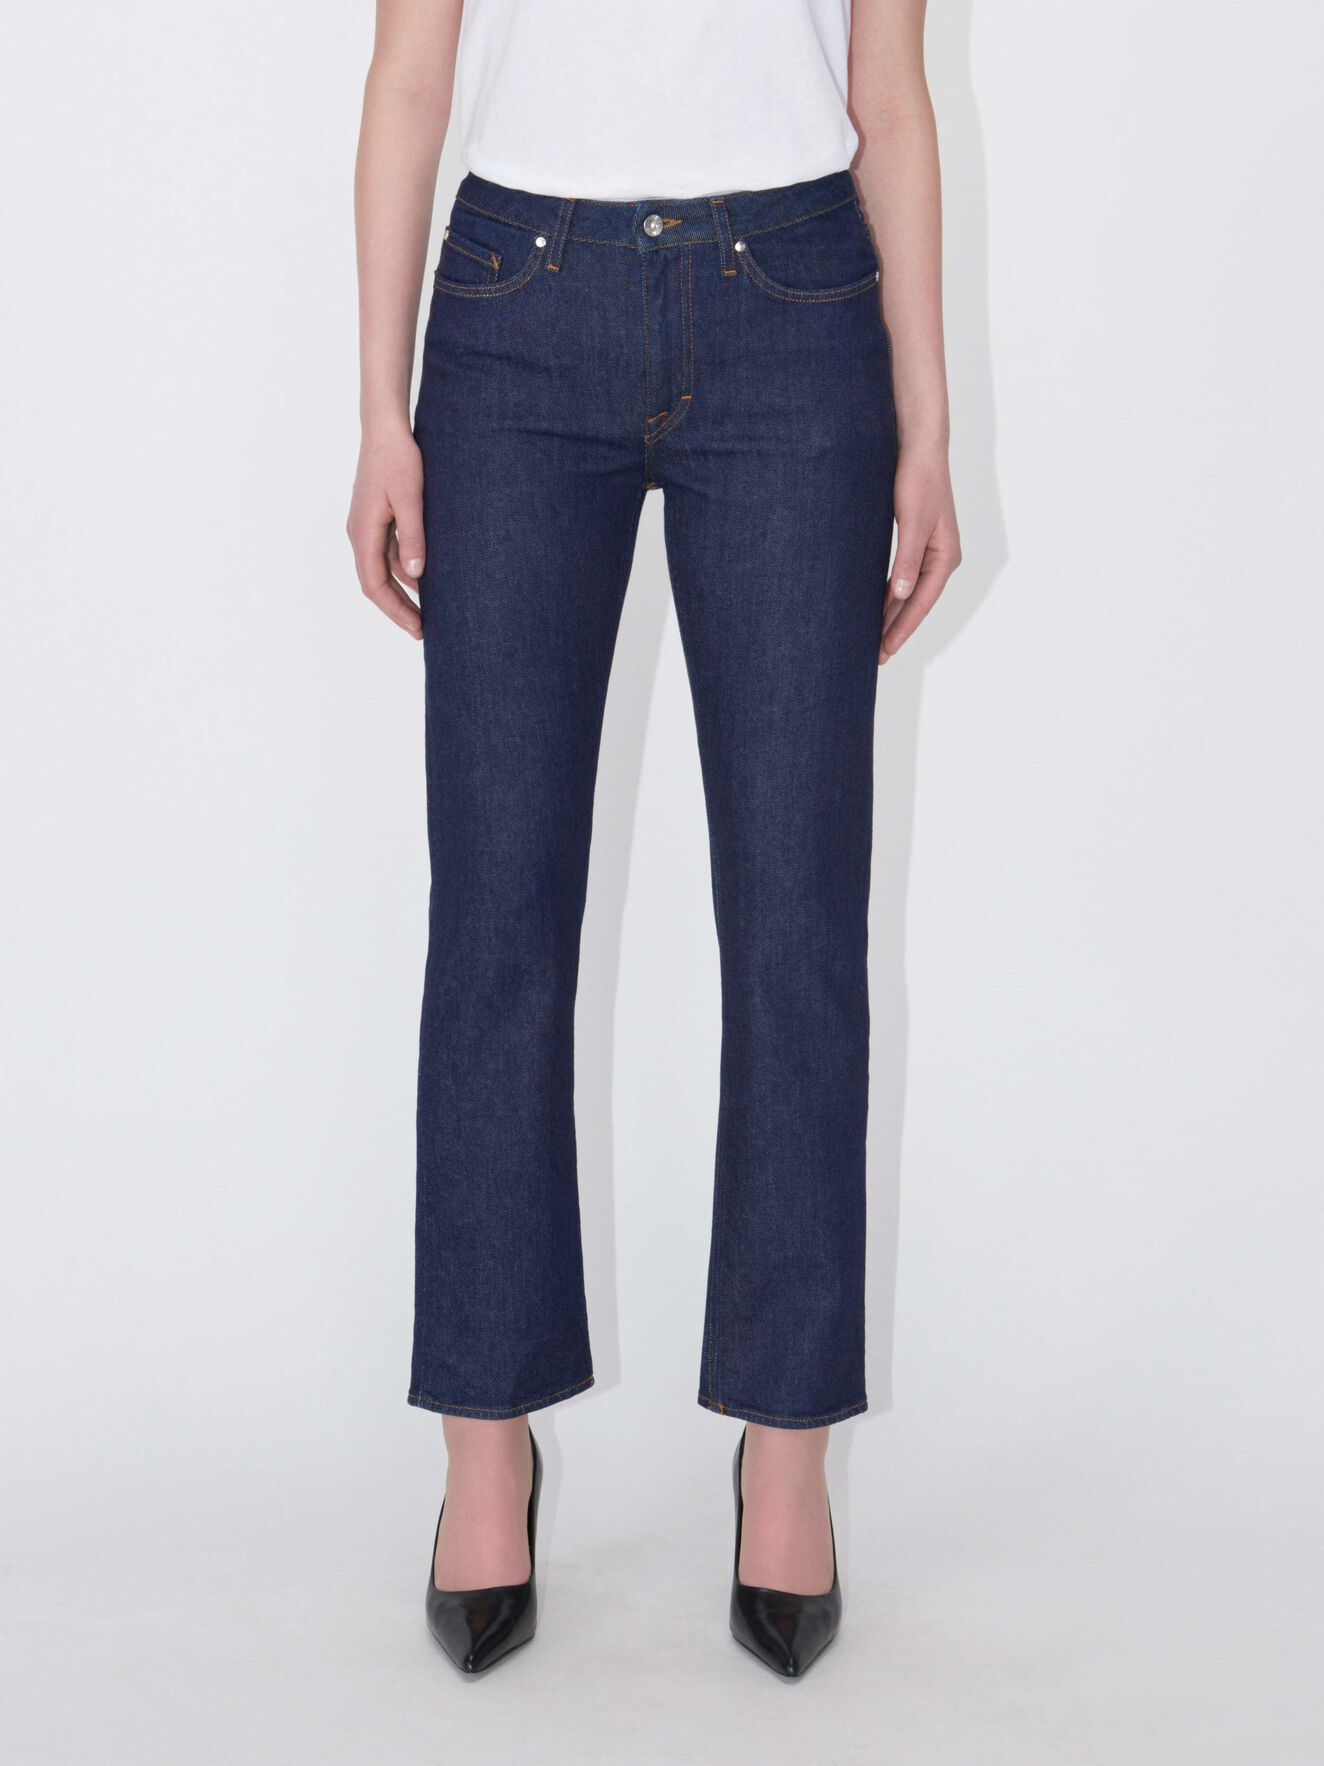 Meg Jeans - Buy Jeans online